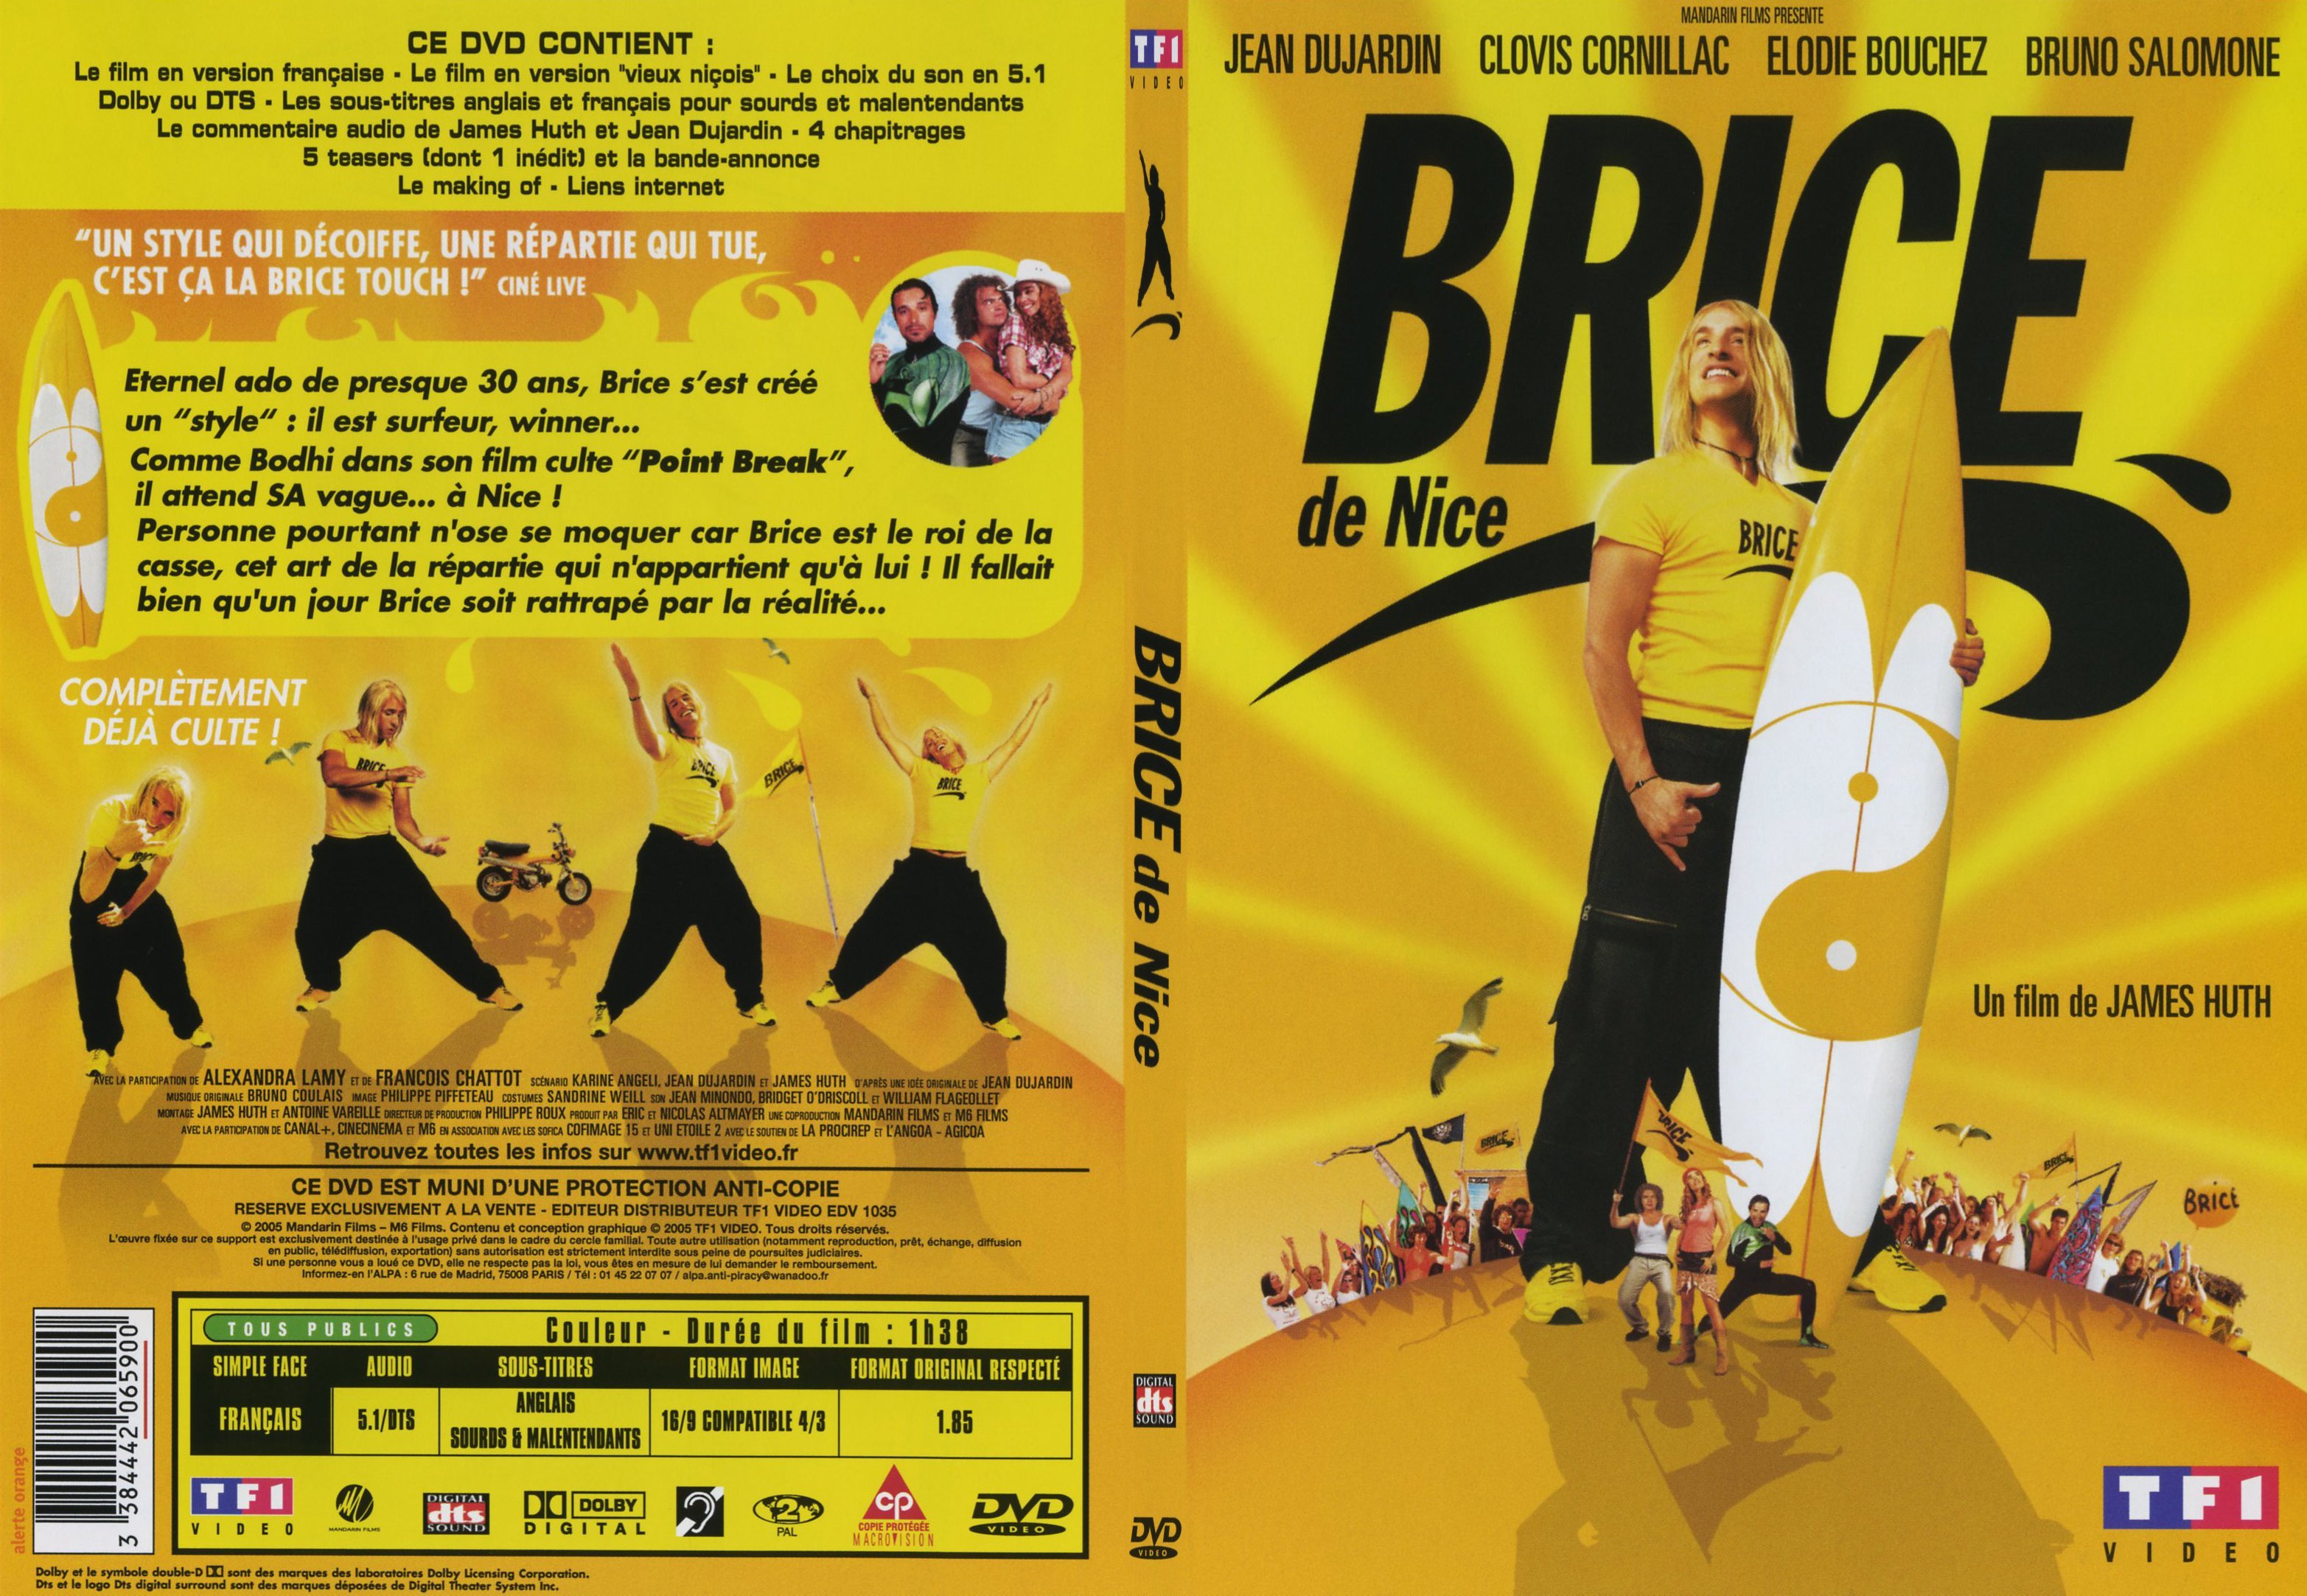 Jaquette DVD Brice de Nice - SLIM v2